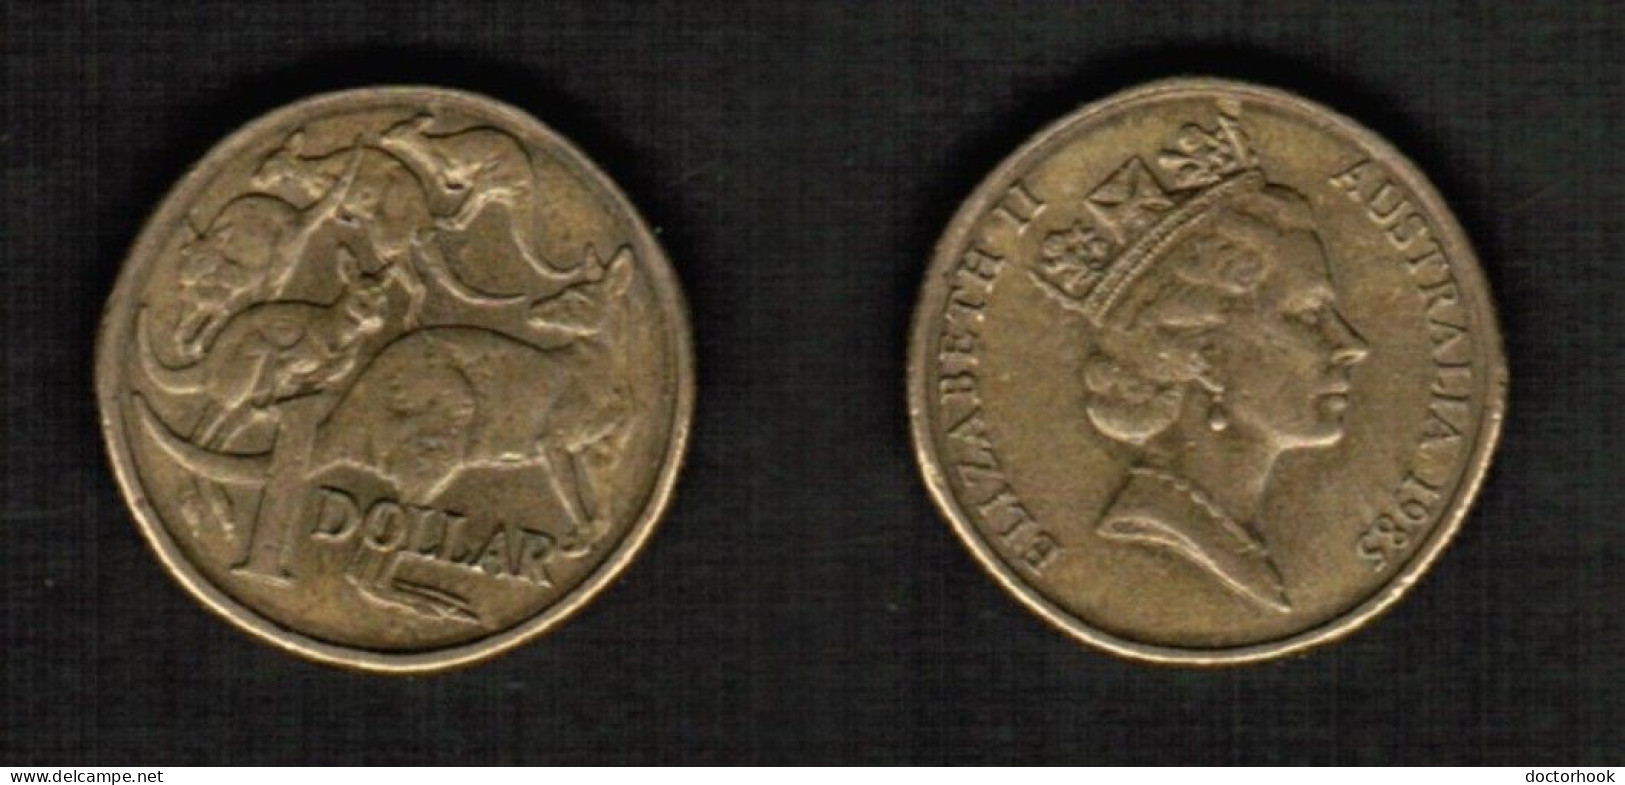 AUSTRALIA   $1.00 DOLLAR 1985 (KM # 84) #7809 - Dollar